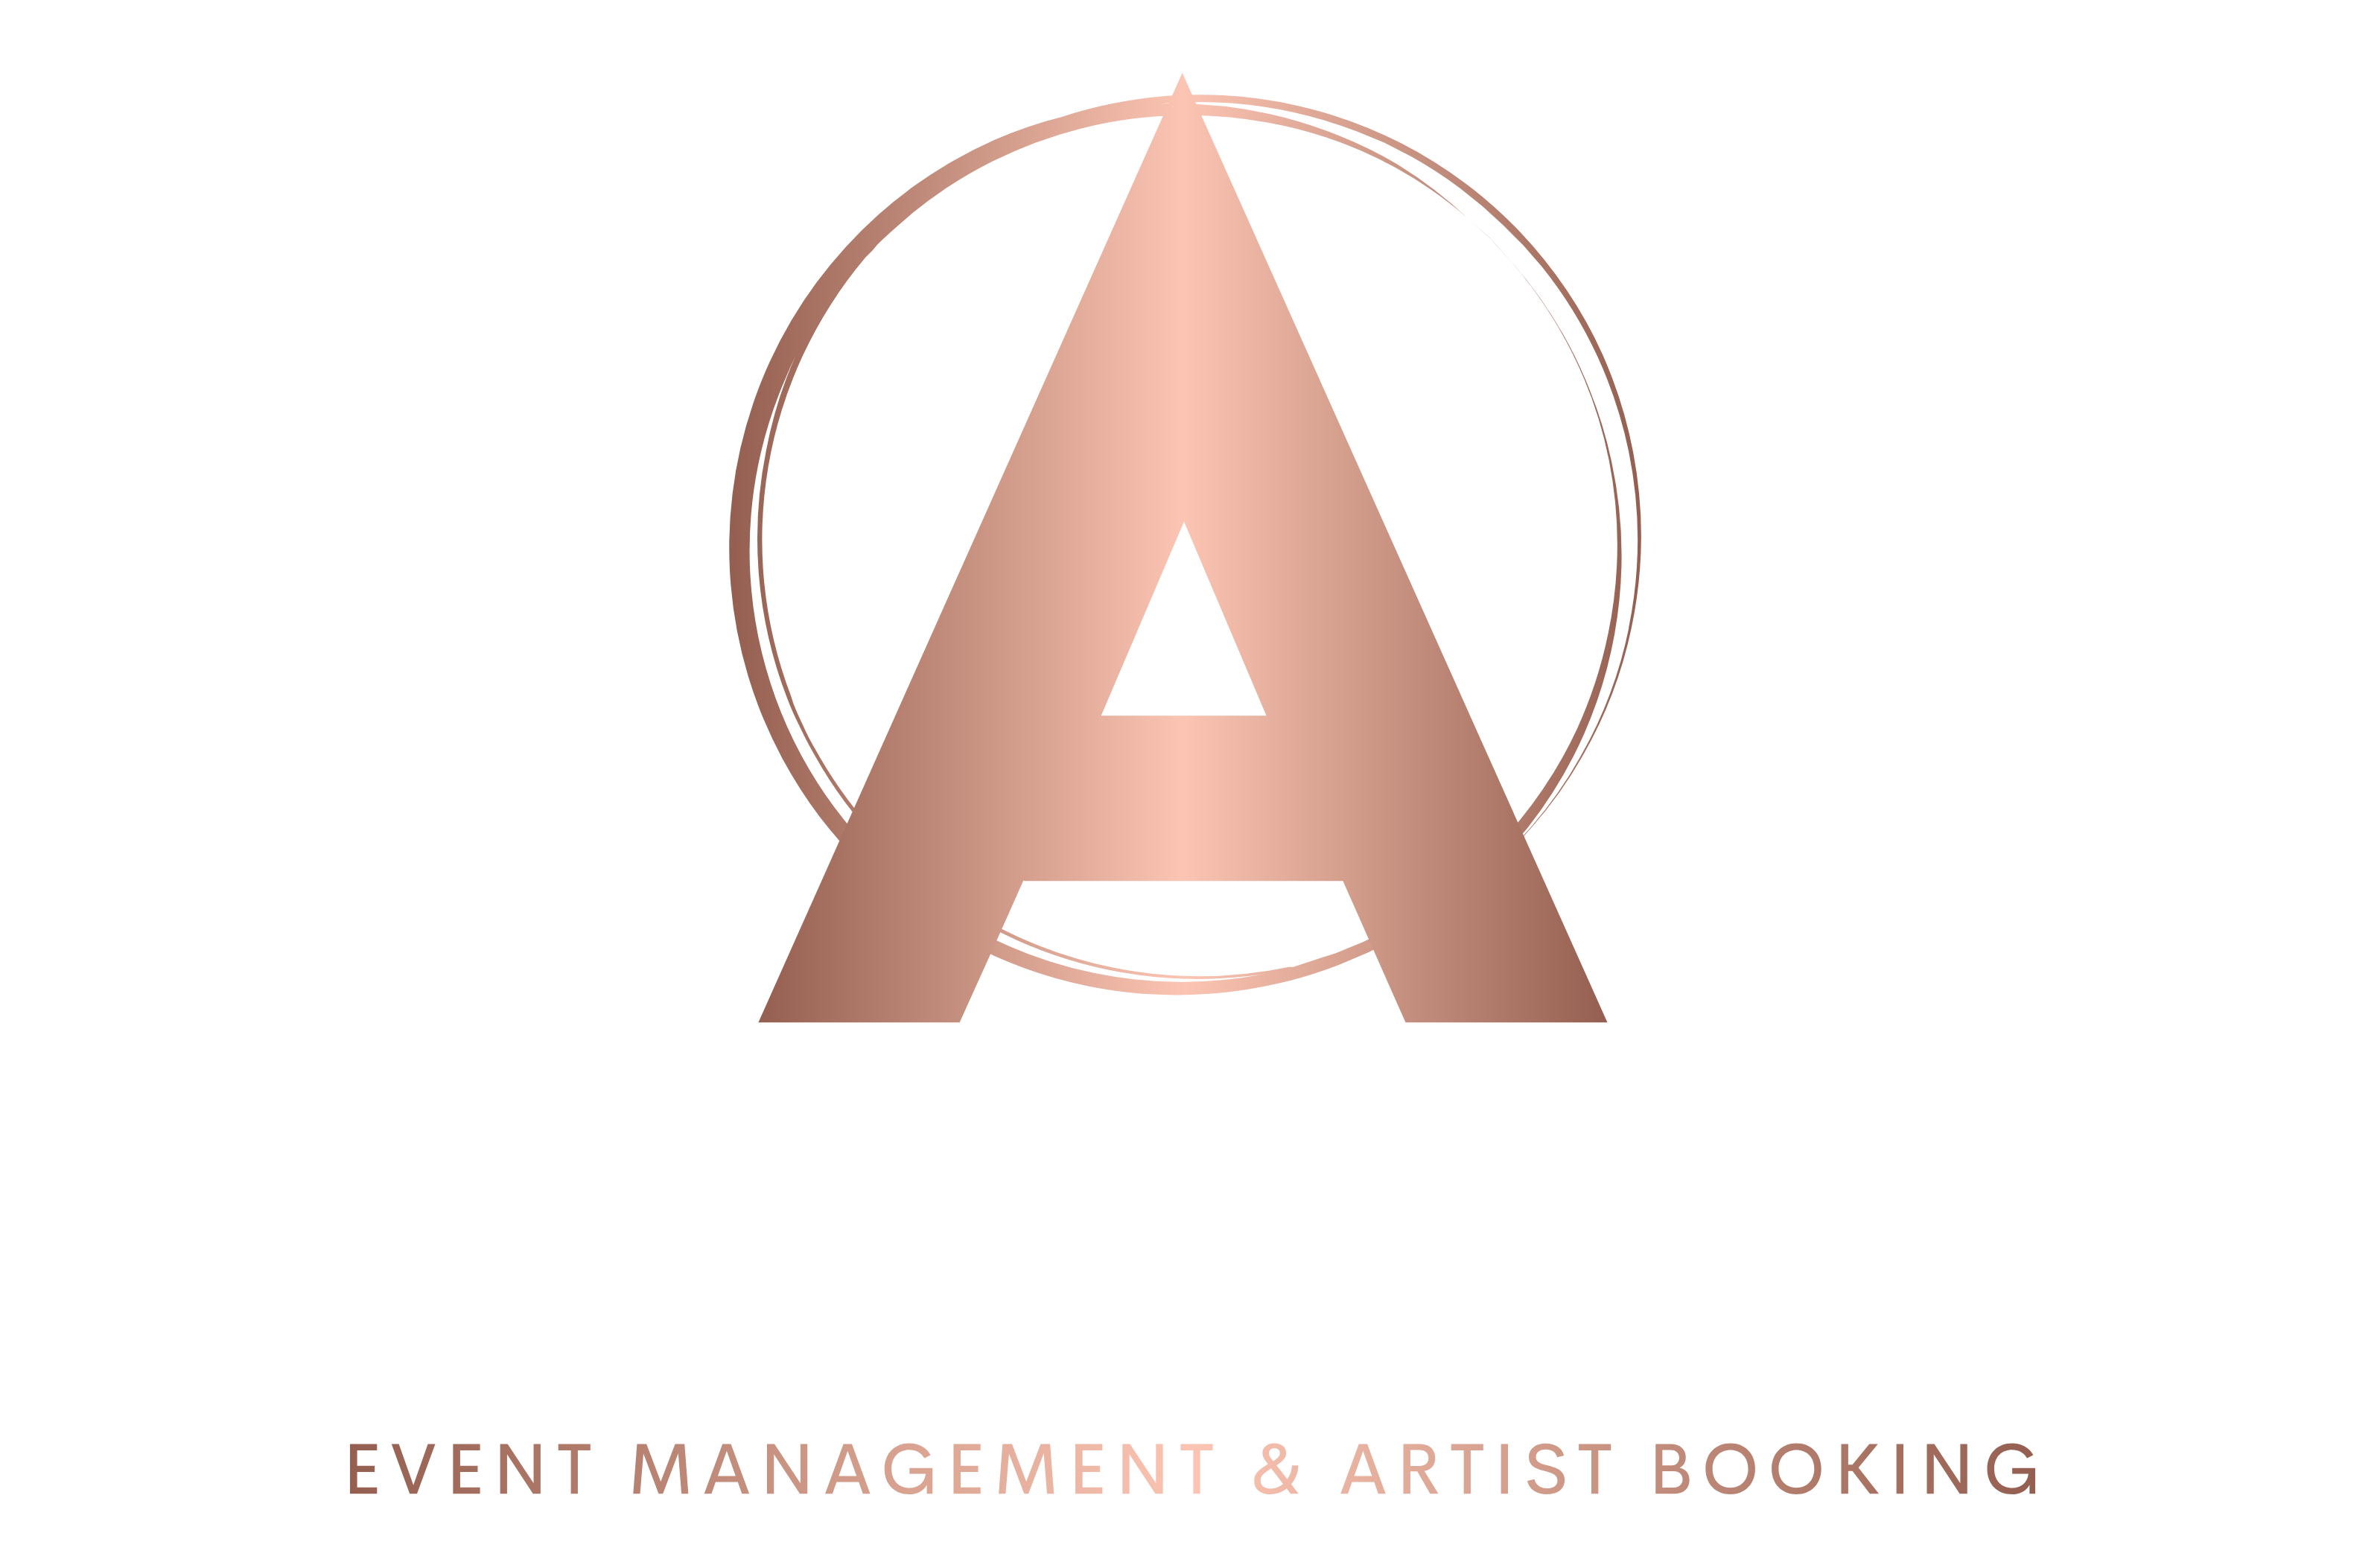 Alex  Bolano van Hessen